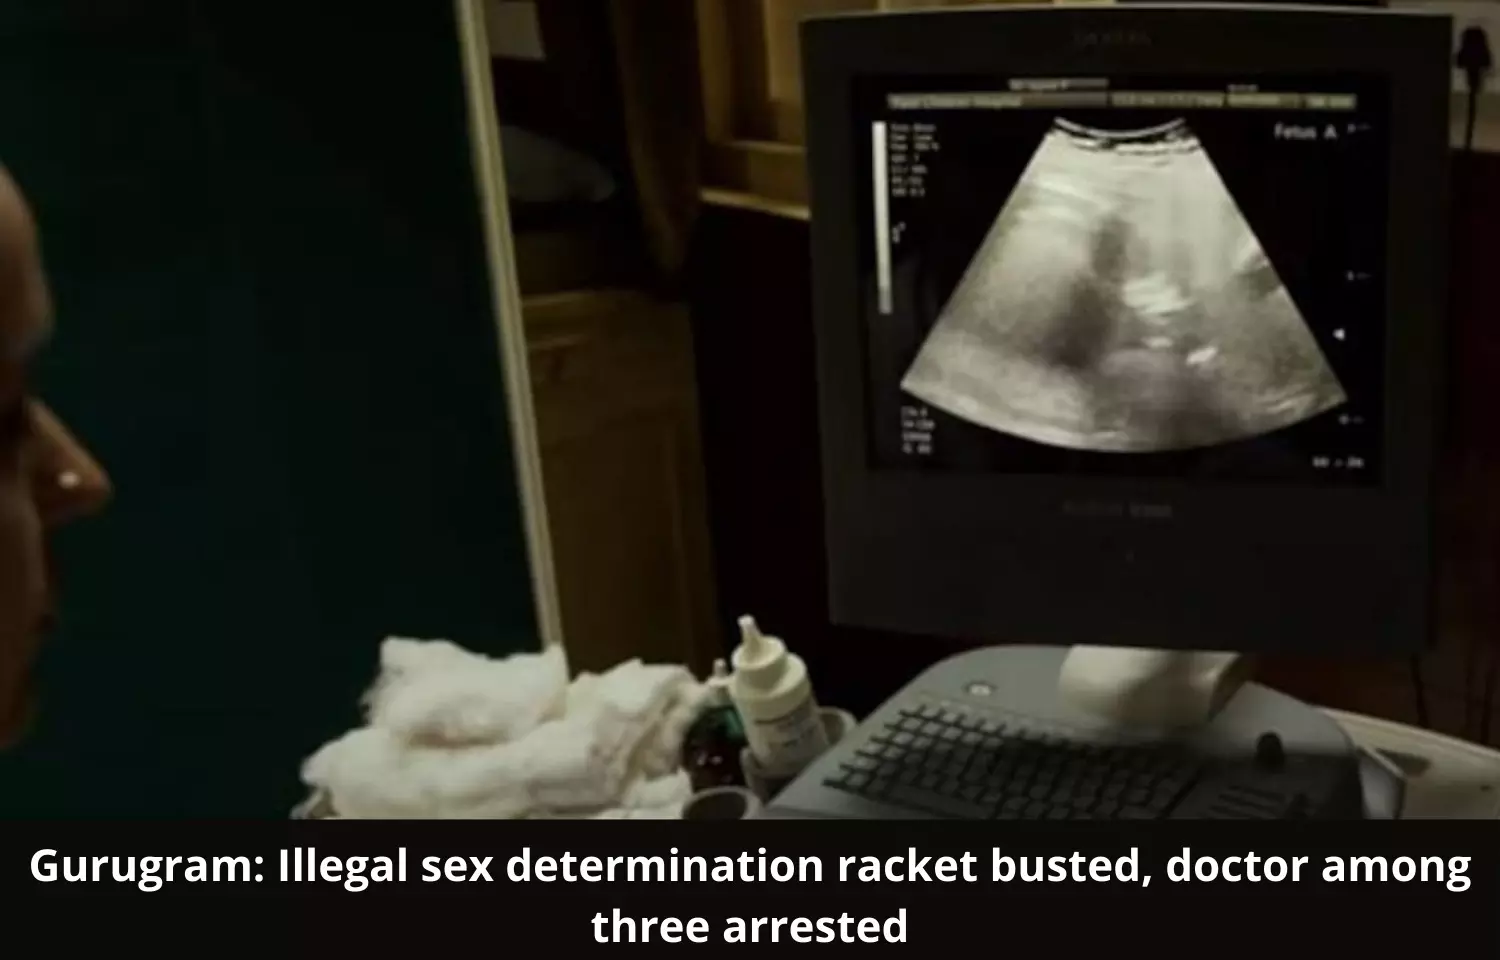 Raid: Doctor among 3 held for allegedly running prenatal sex determination racket